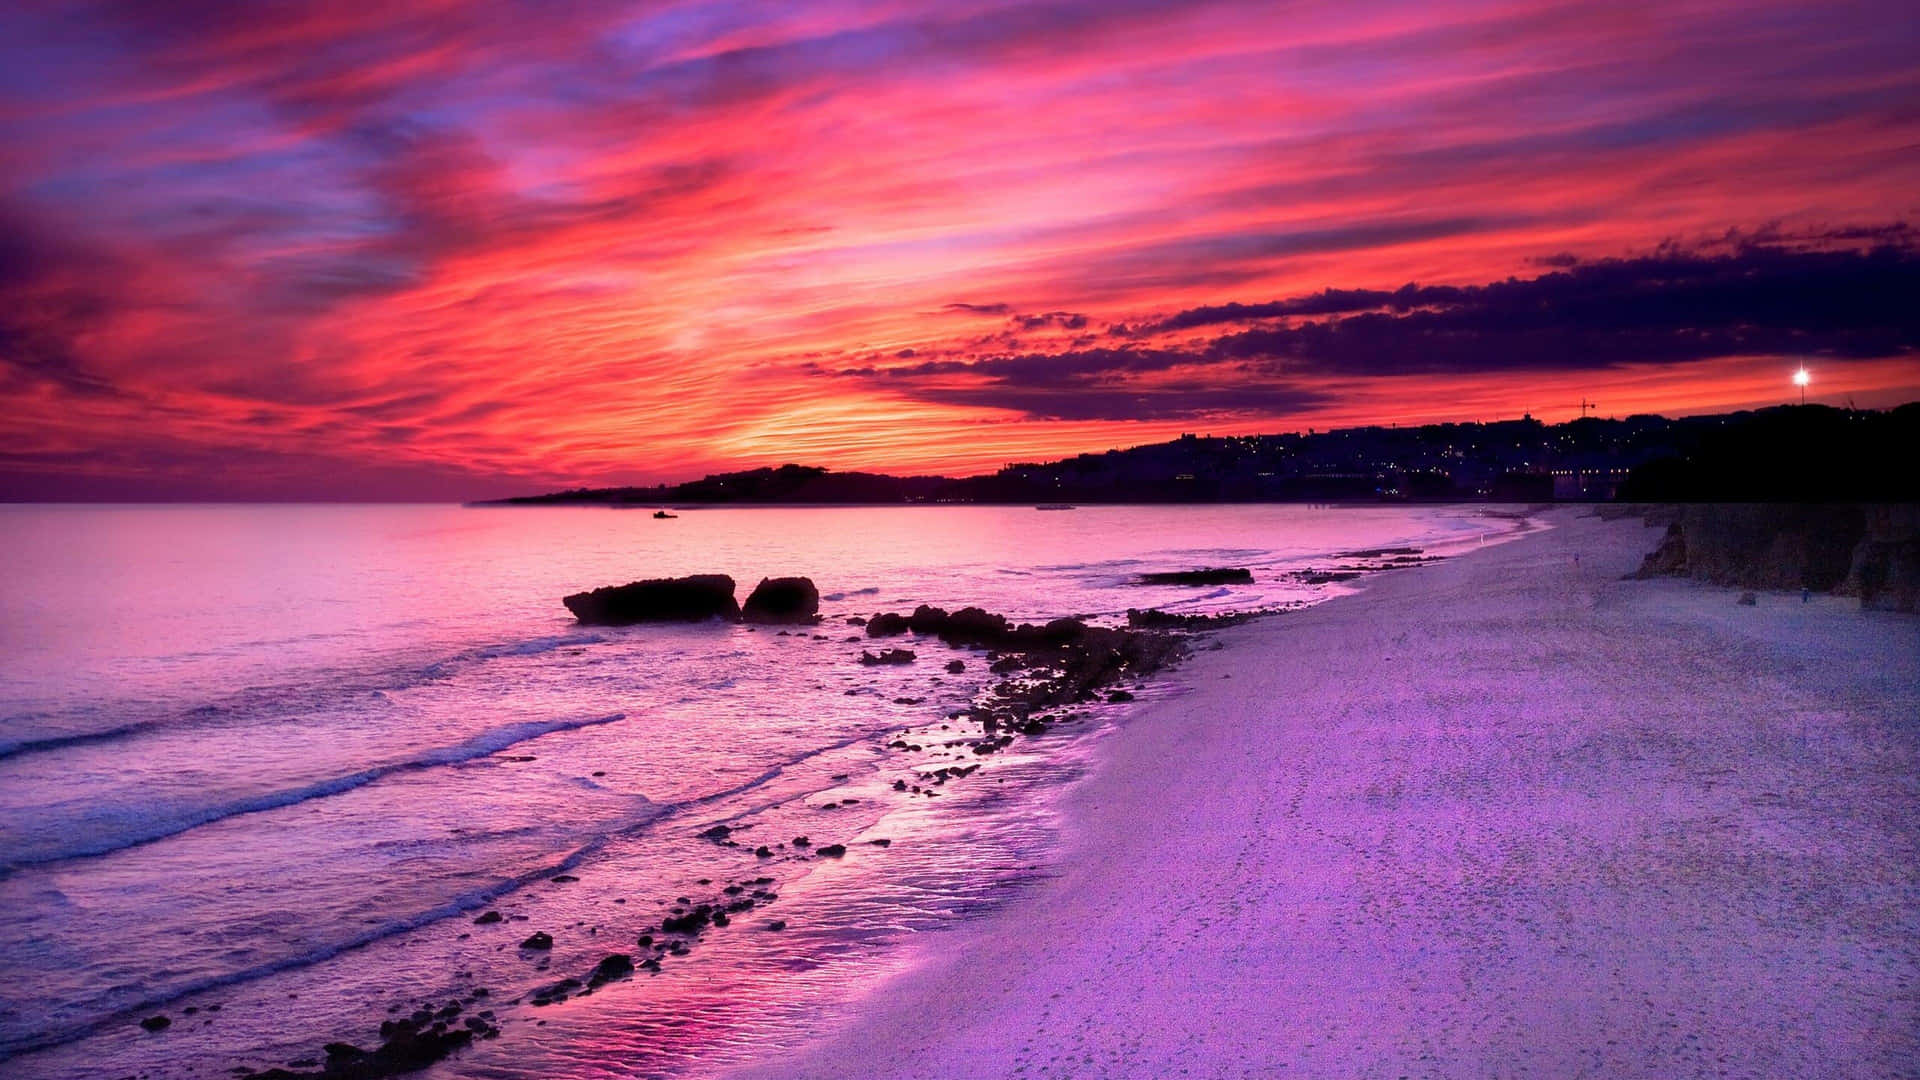 A Dreamy Pink Sunset